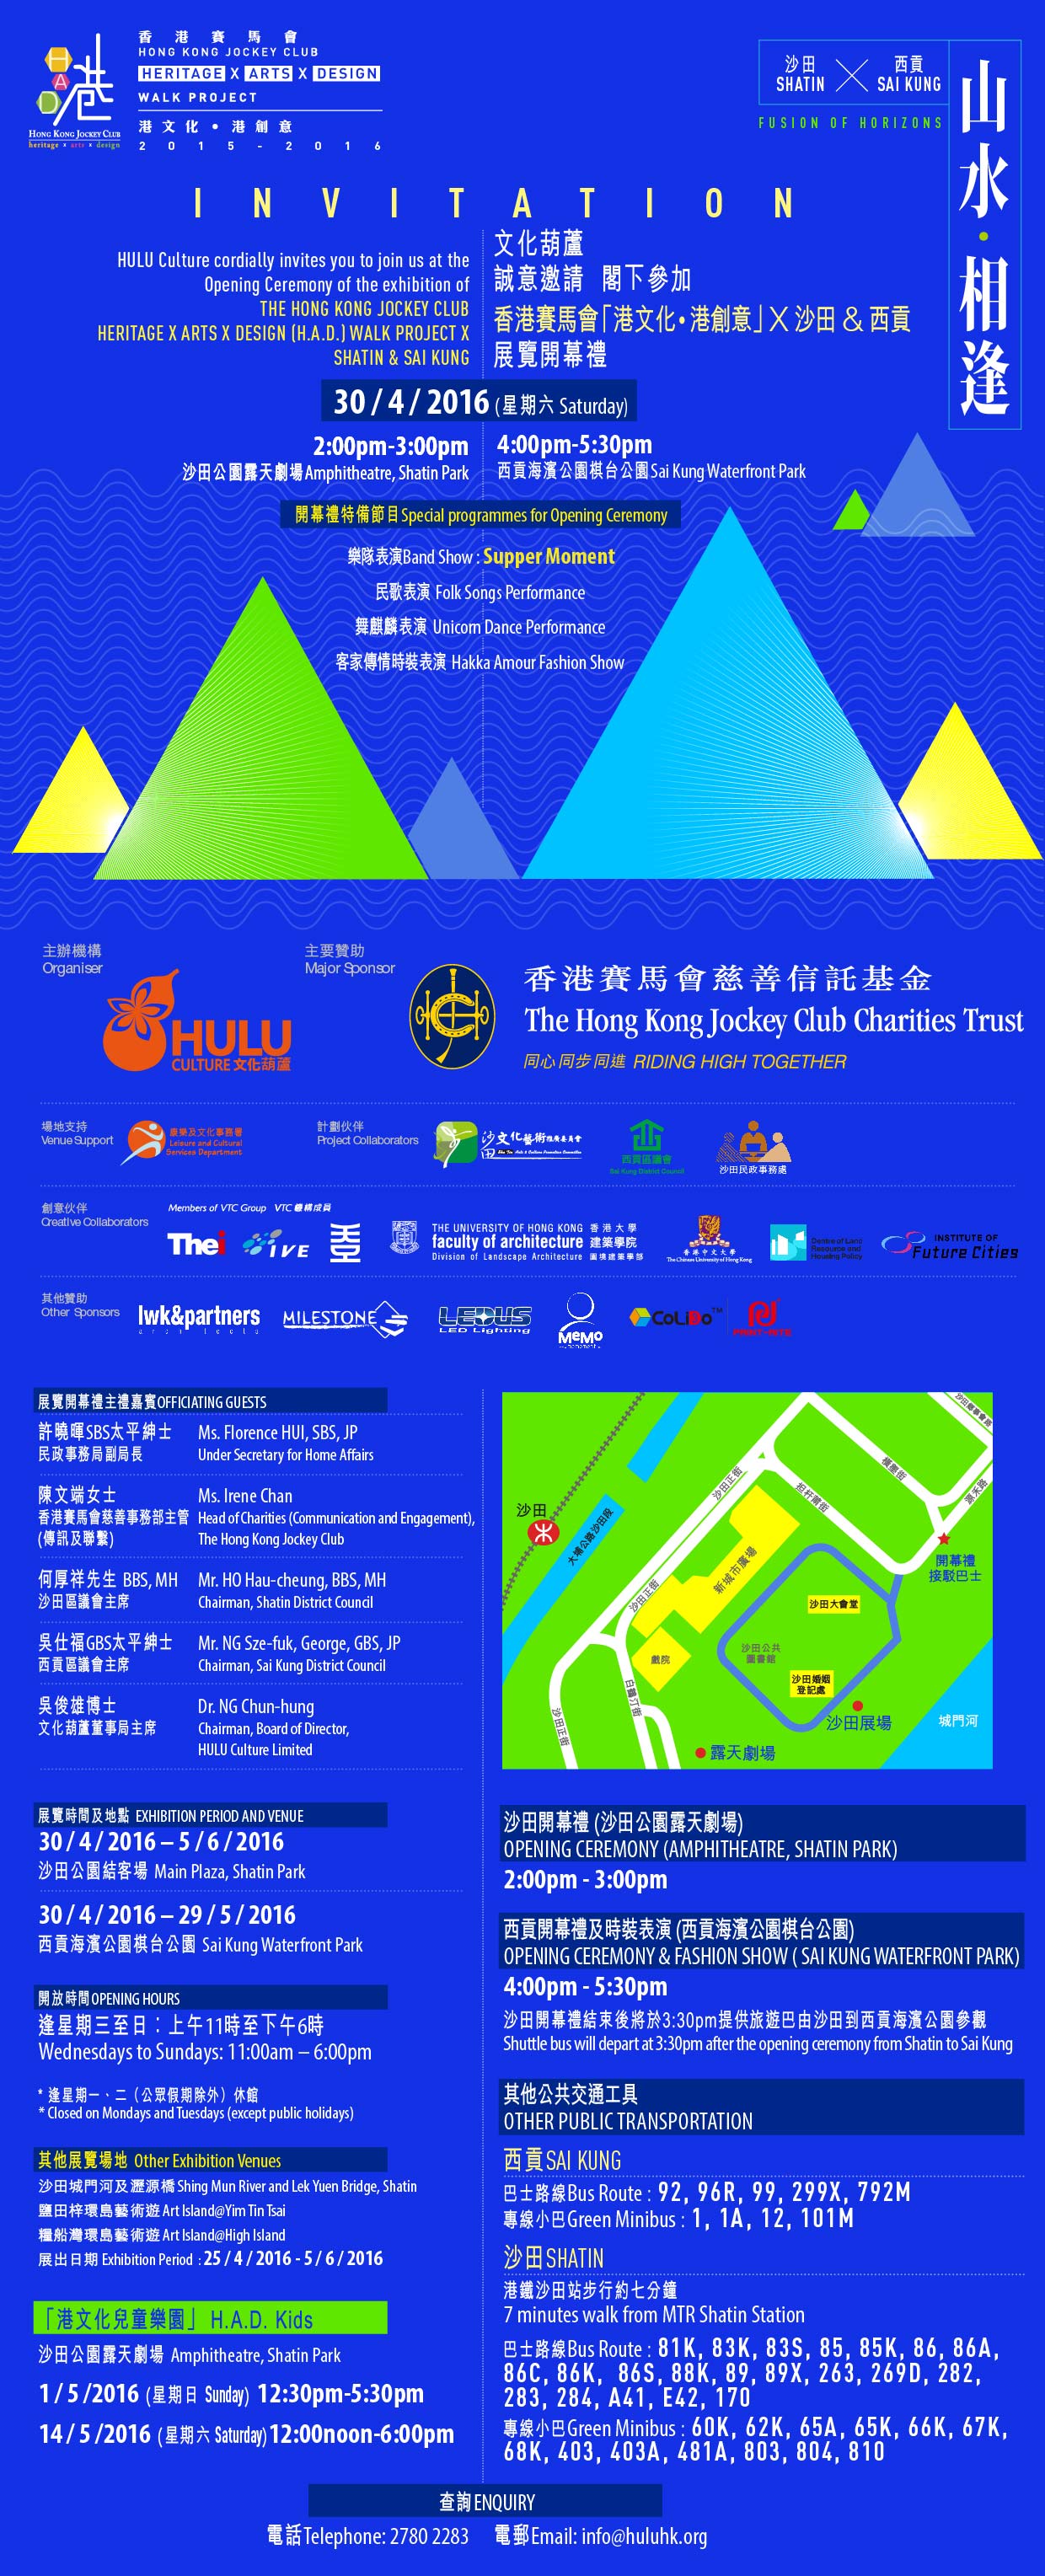 The Hong Kong Jockey Club "Heritage x Arts x Design (H.A.D.) Walk Project X Shatin & Sai Kung